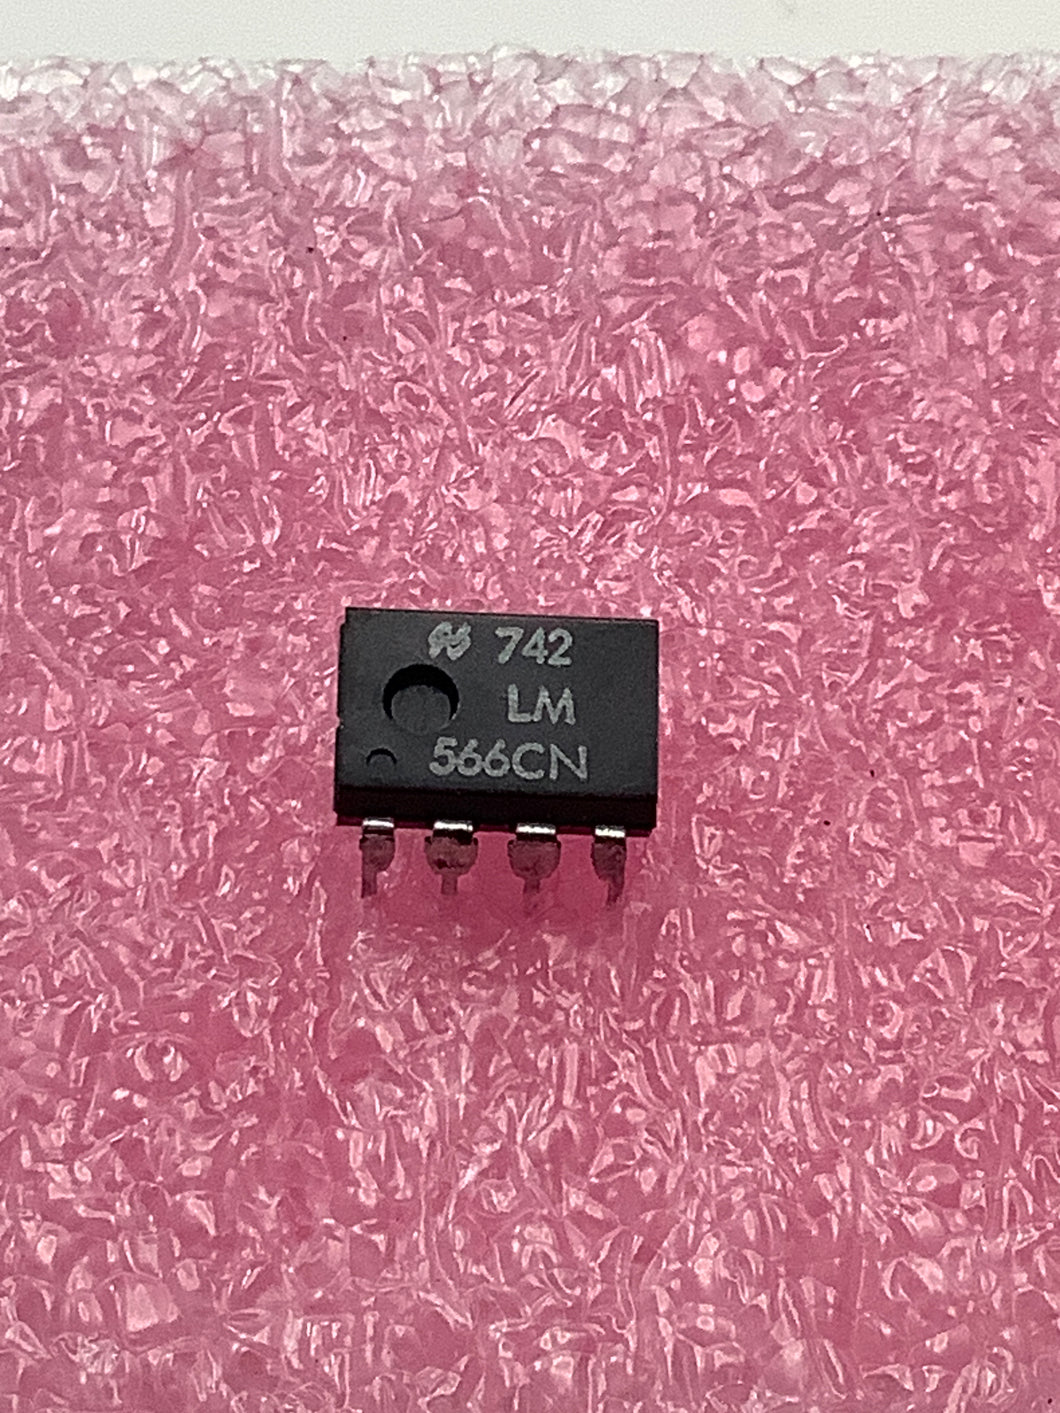 LM566CN - NSC - Voltage Controlled Oscillator